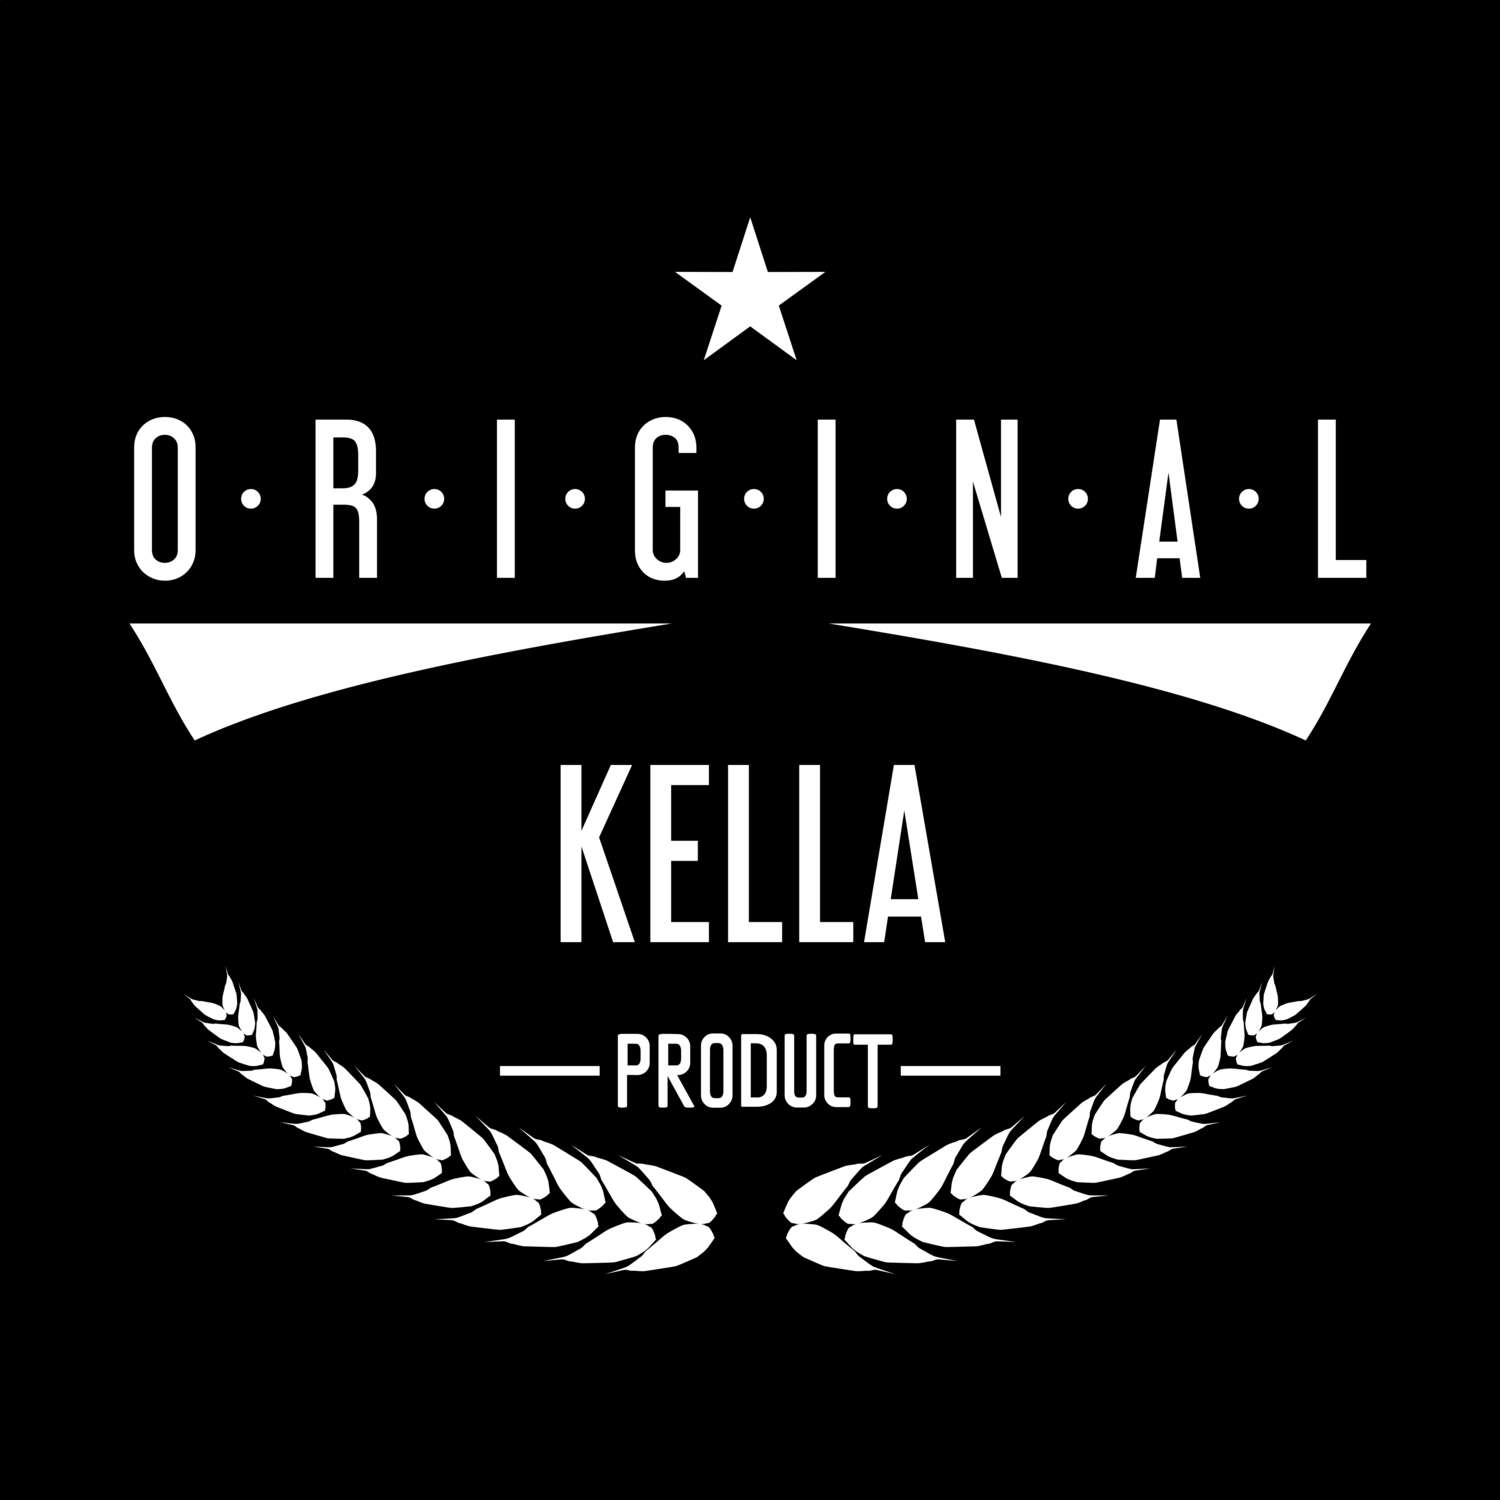 Kella T-Shirt »Original Product«